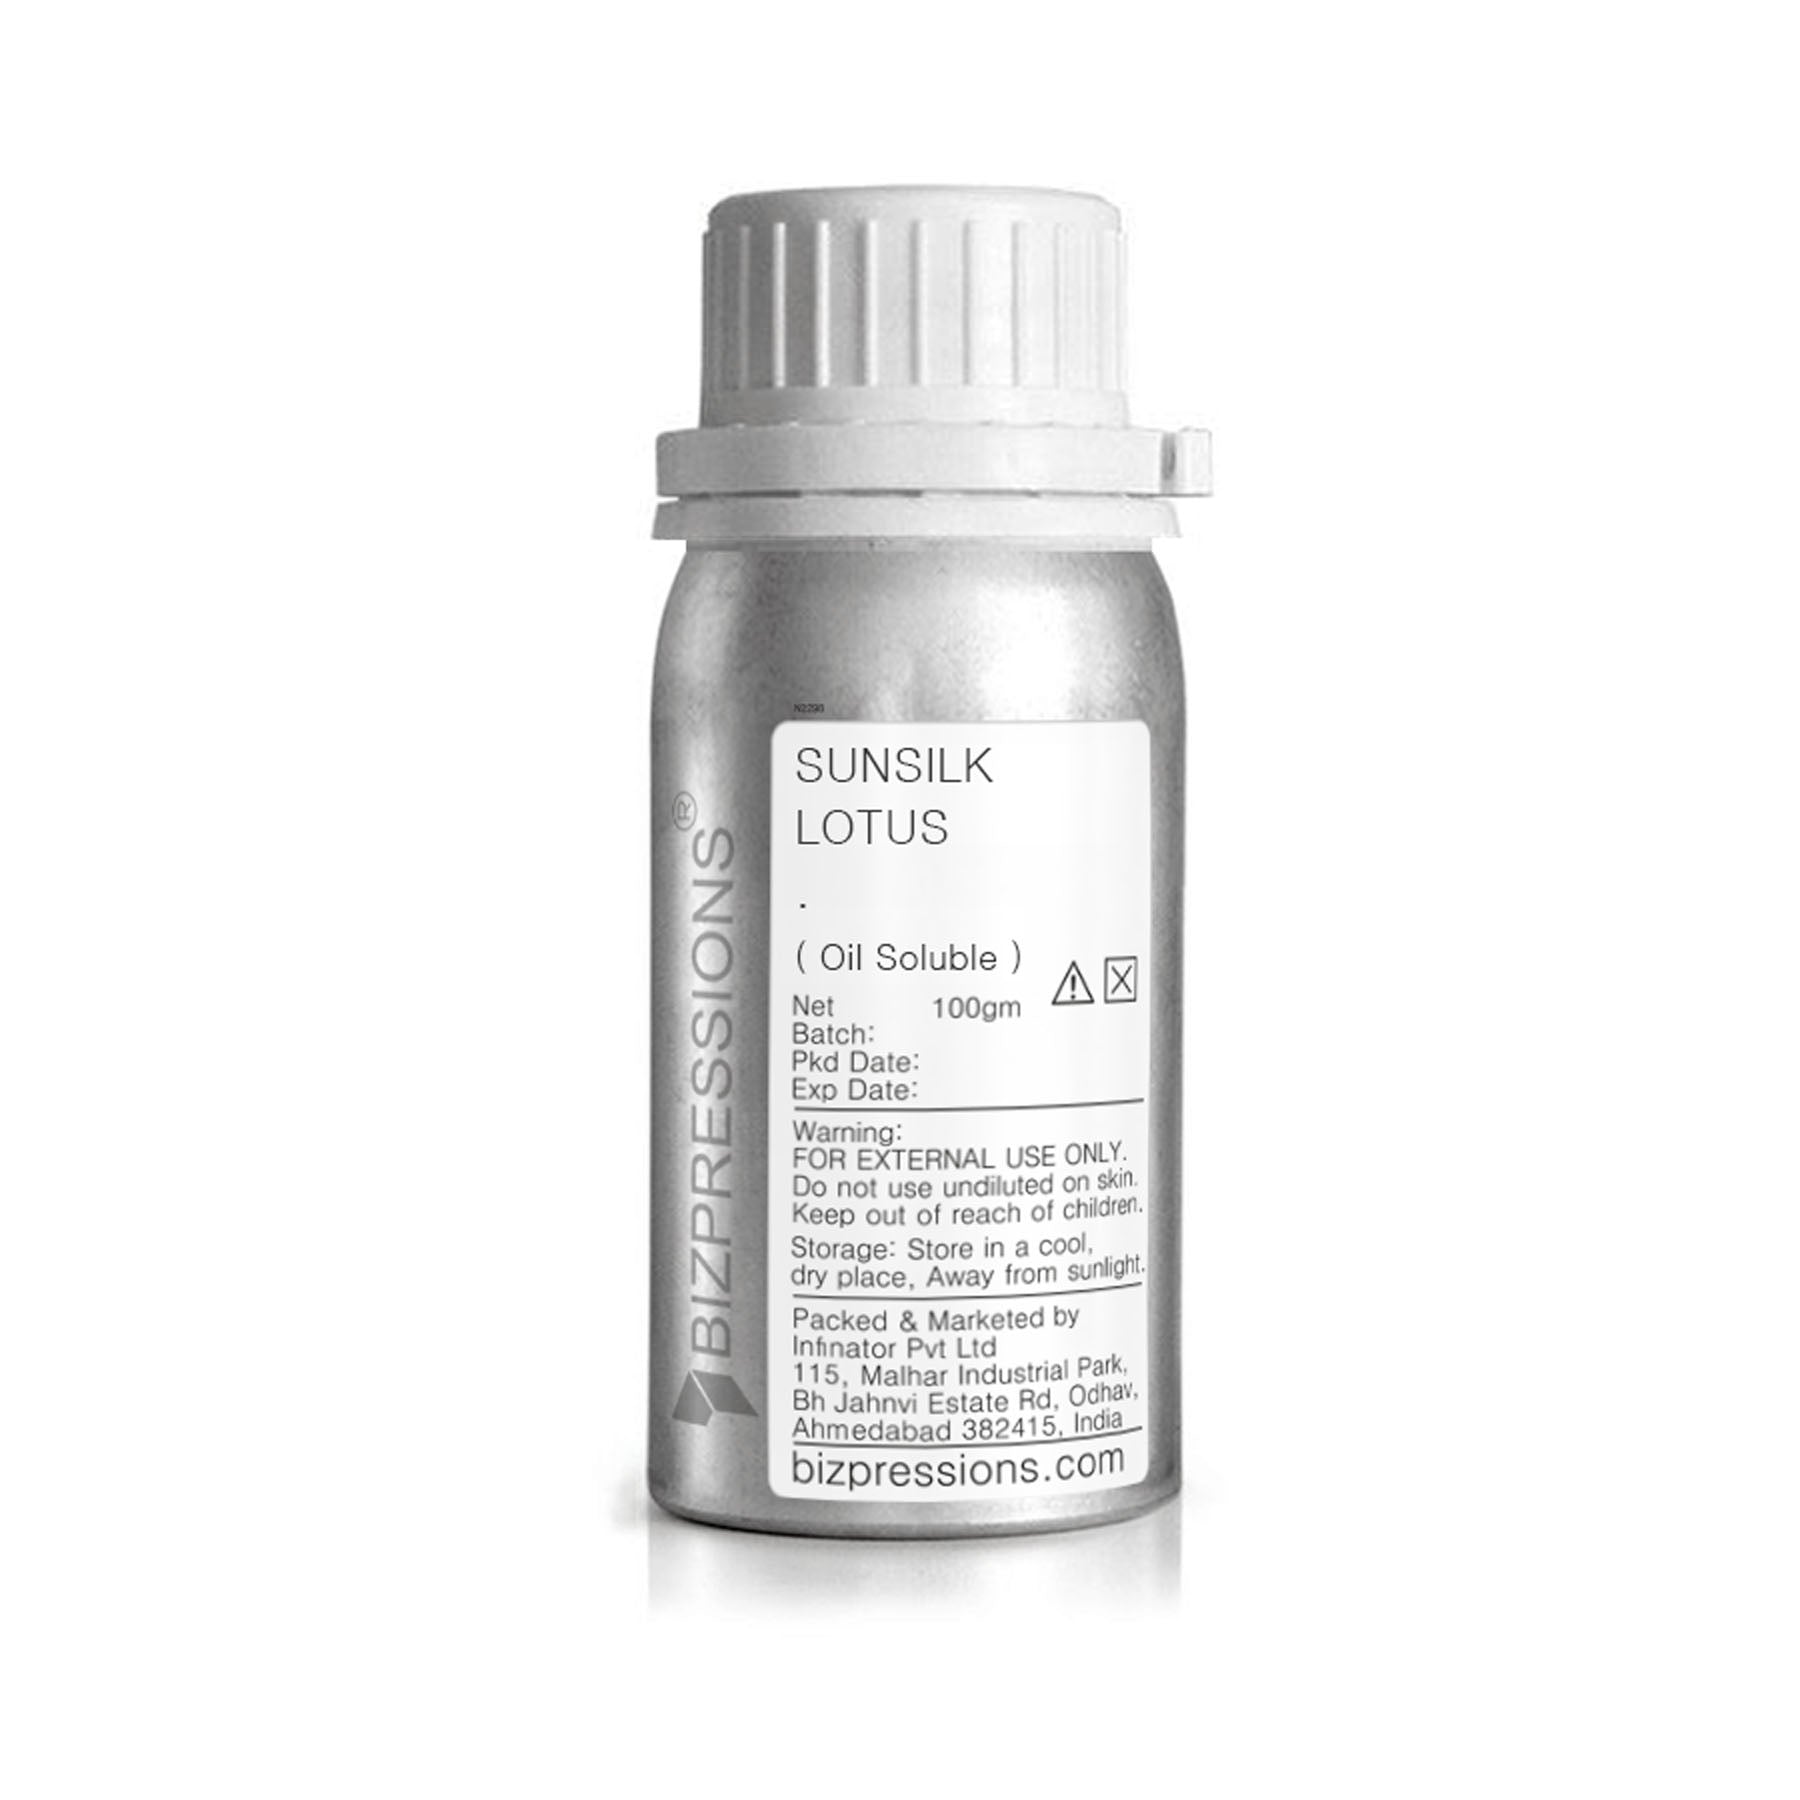 SUNSILK LOTUS - Fragrance ( Oil Soluble ) - 100 gm